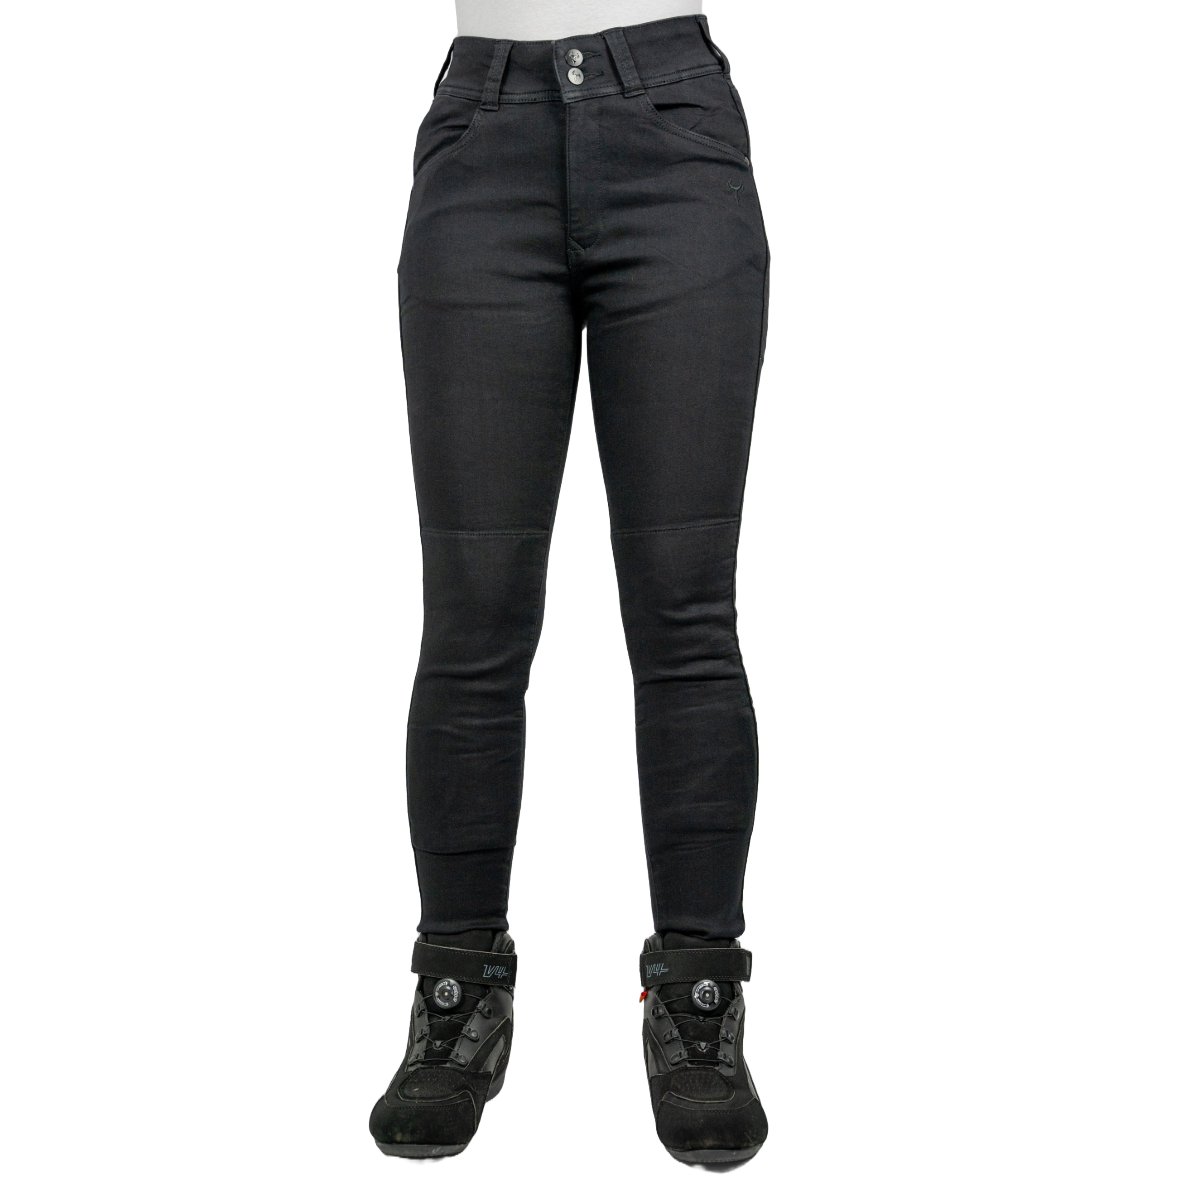 Image of Bull-it Ladies Fury Skinny Fit Short Pants Black Size 42 ID 5059684008852